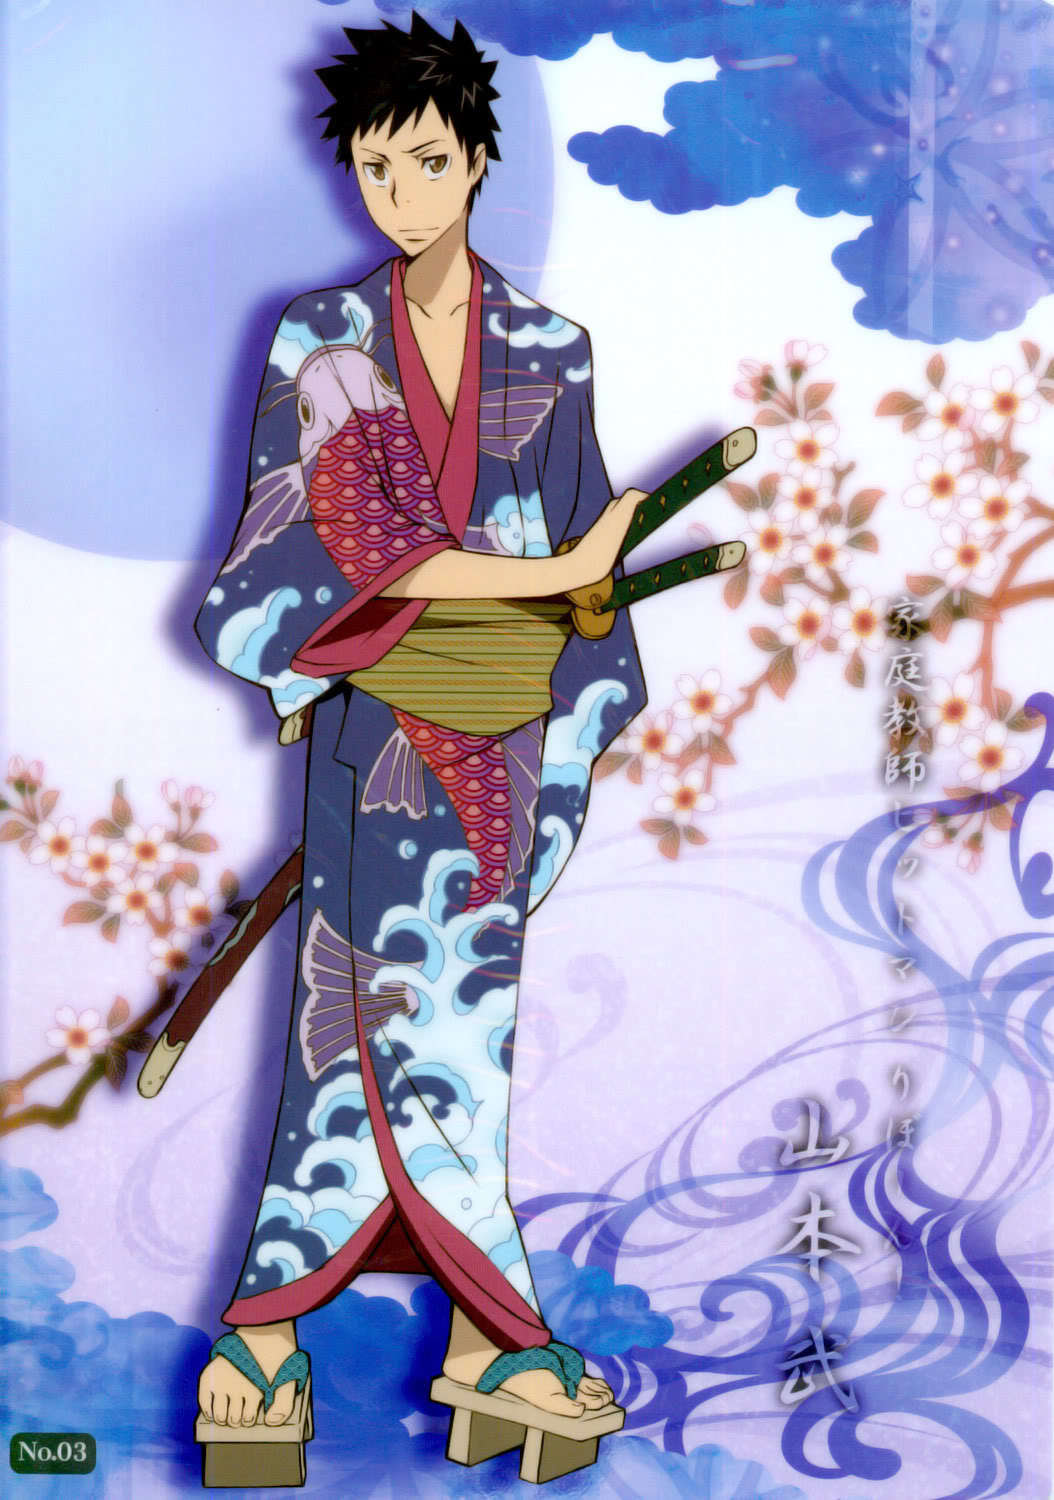 Post a male character wearing a kimono - Anime Answers - Fanpop